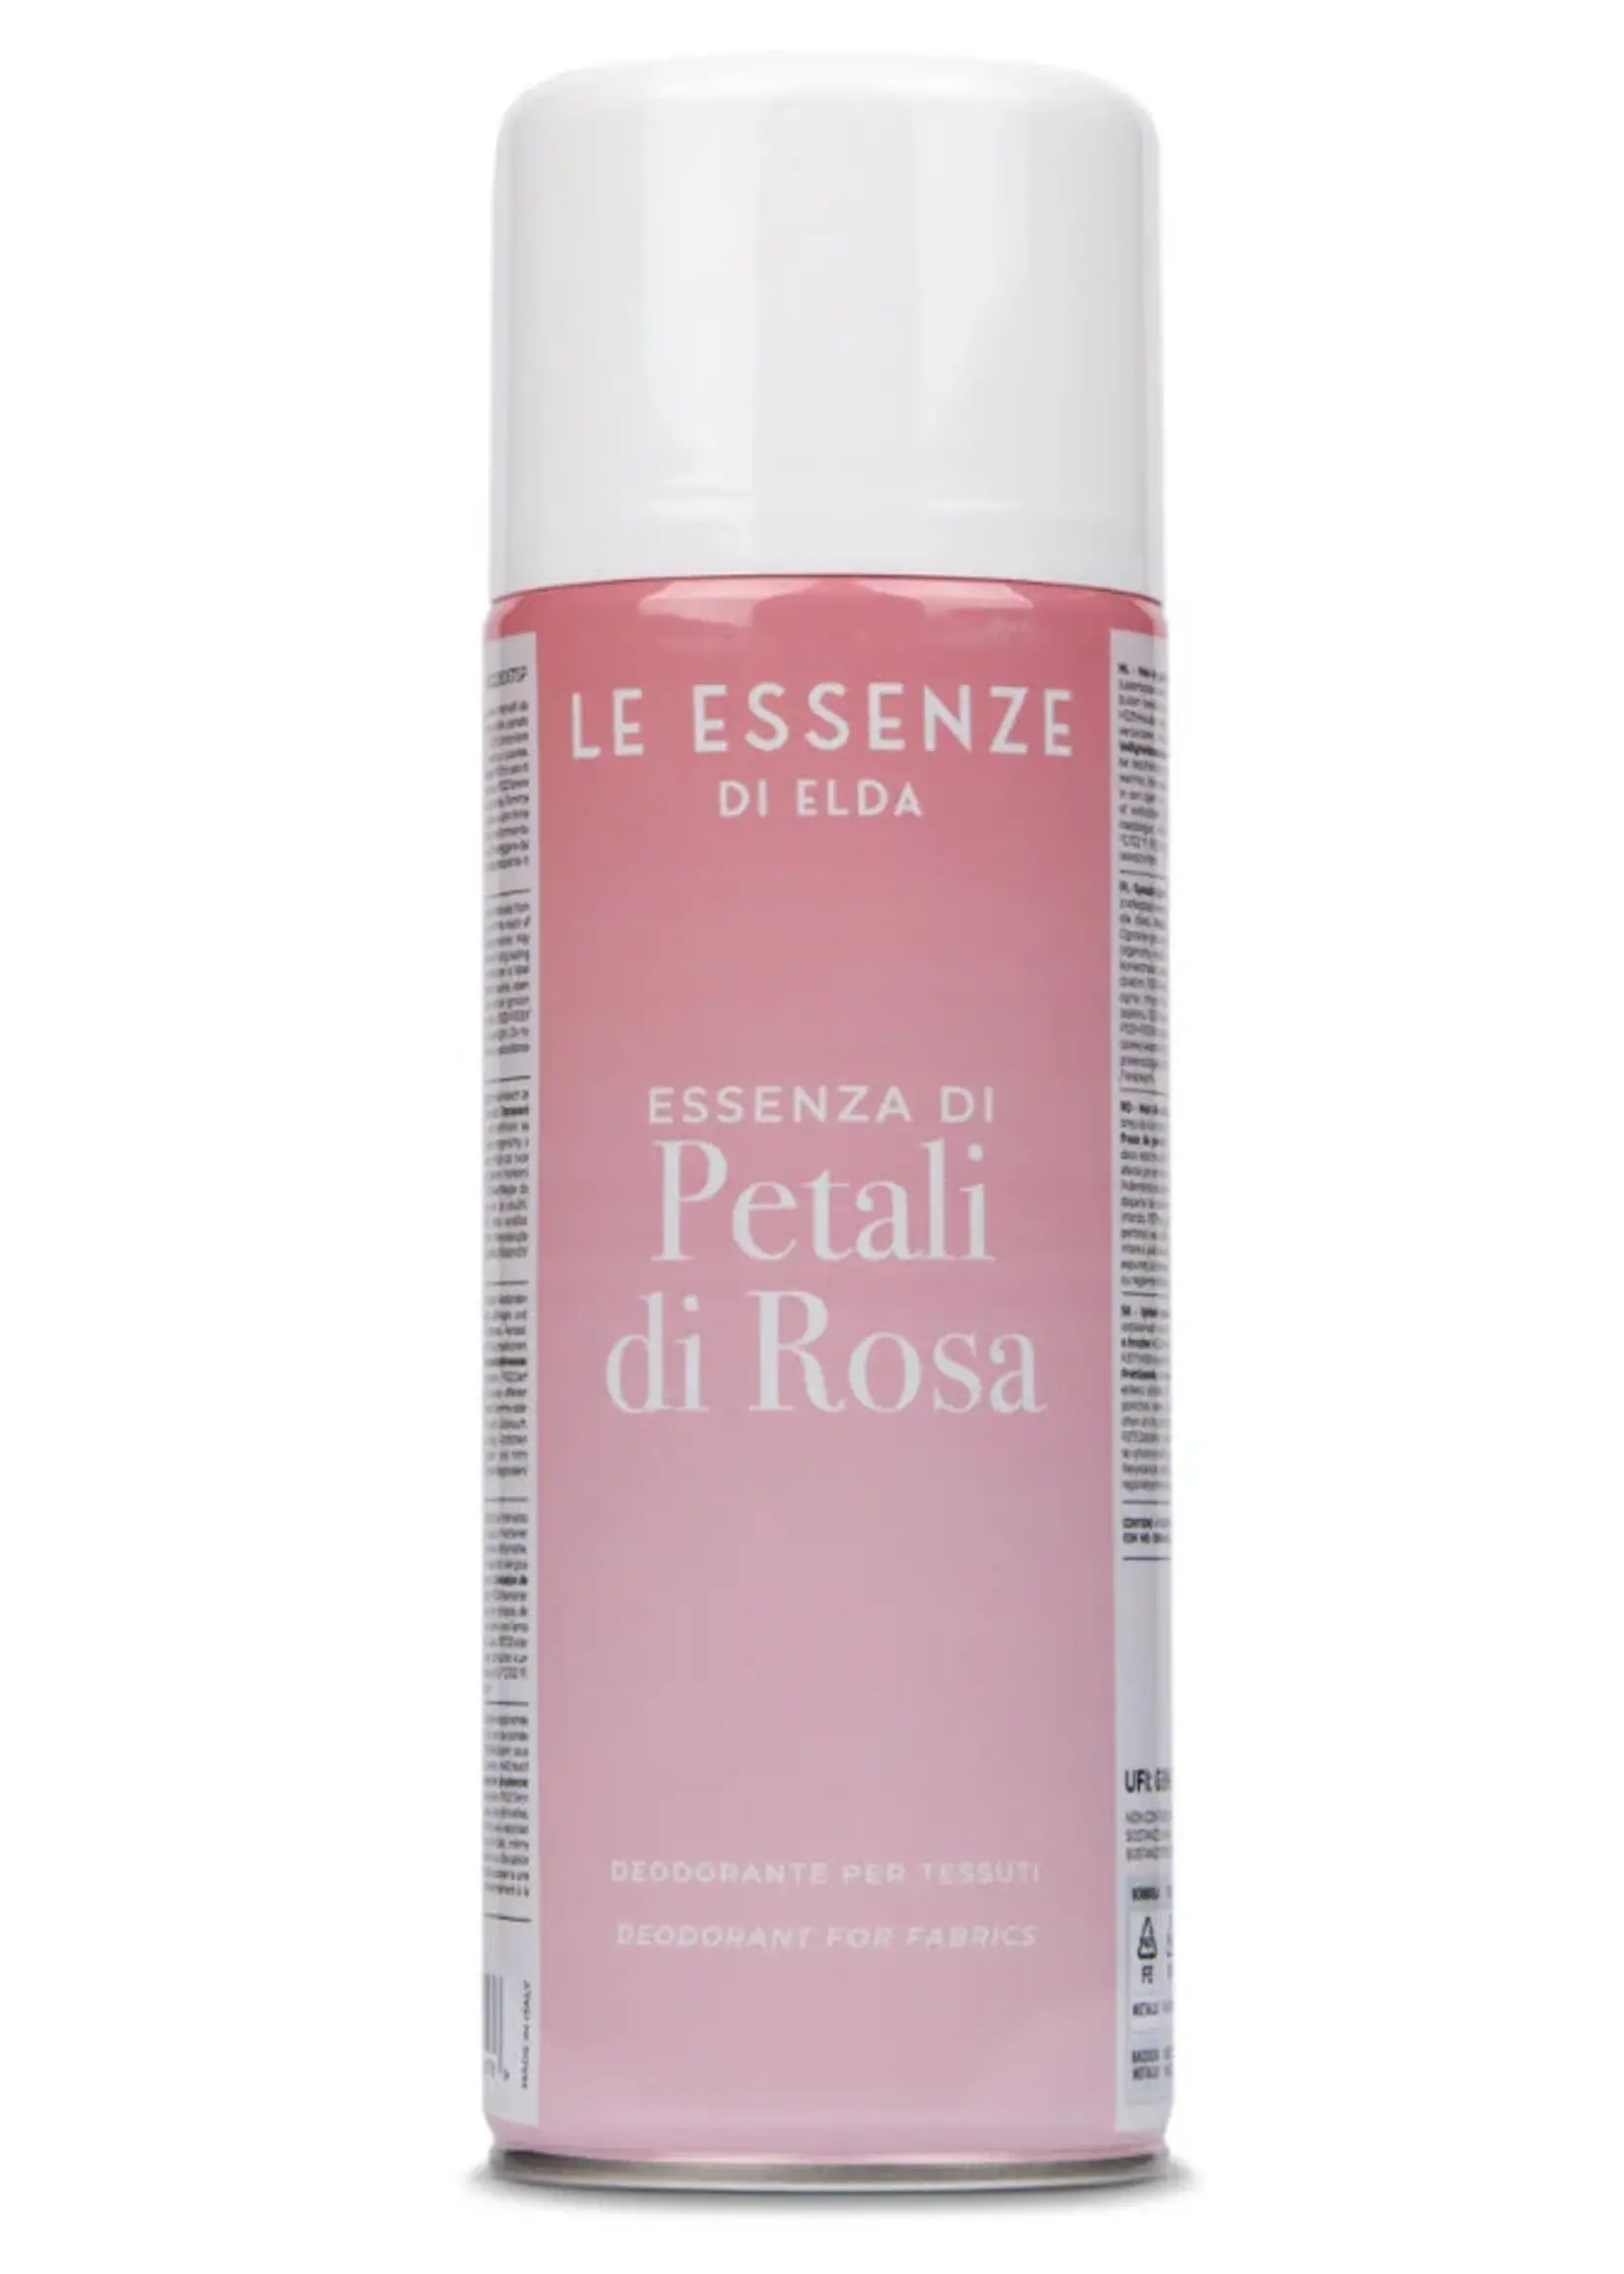 Le Essenza di Elda Krachtig geurende textielverfrisser Petali di Rosa